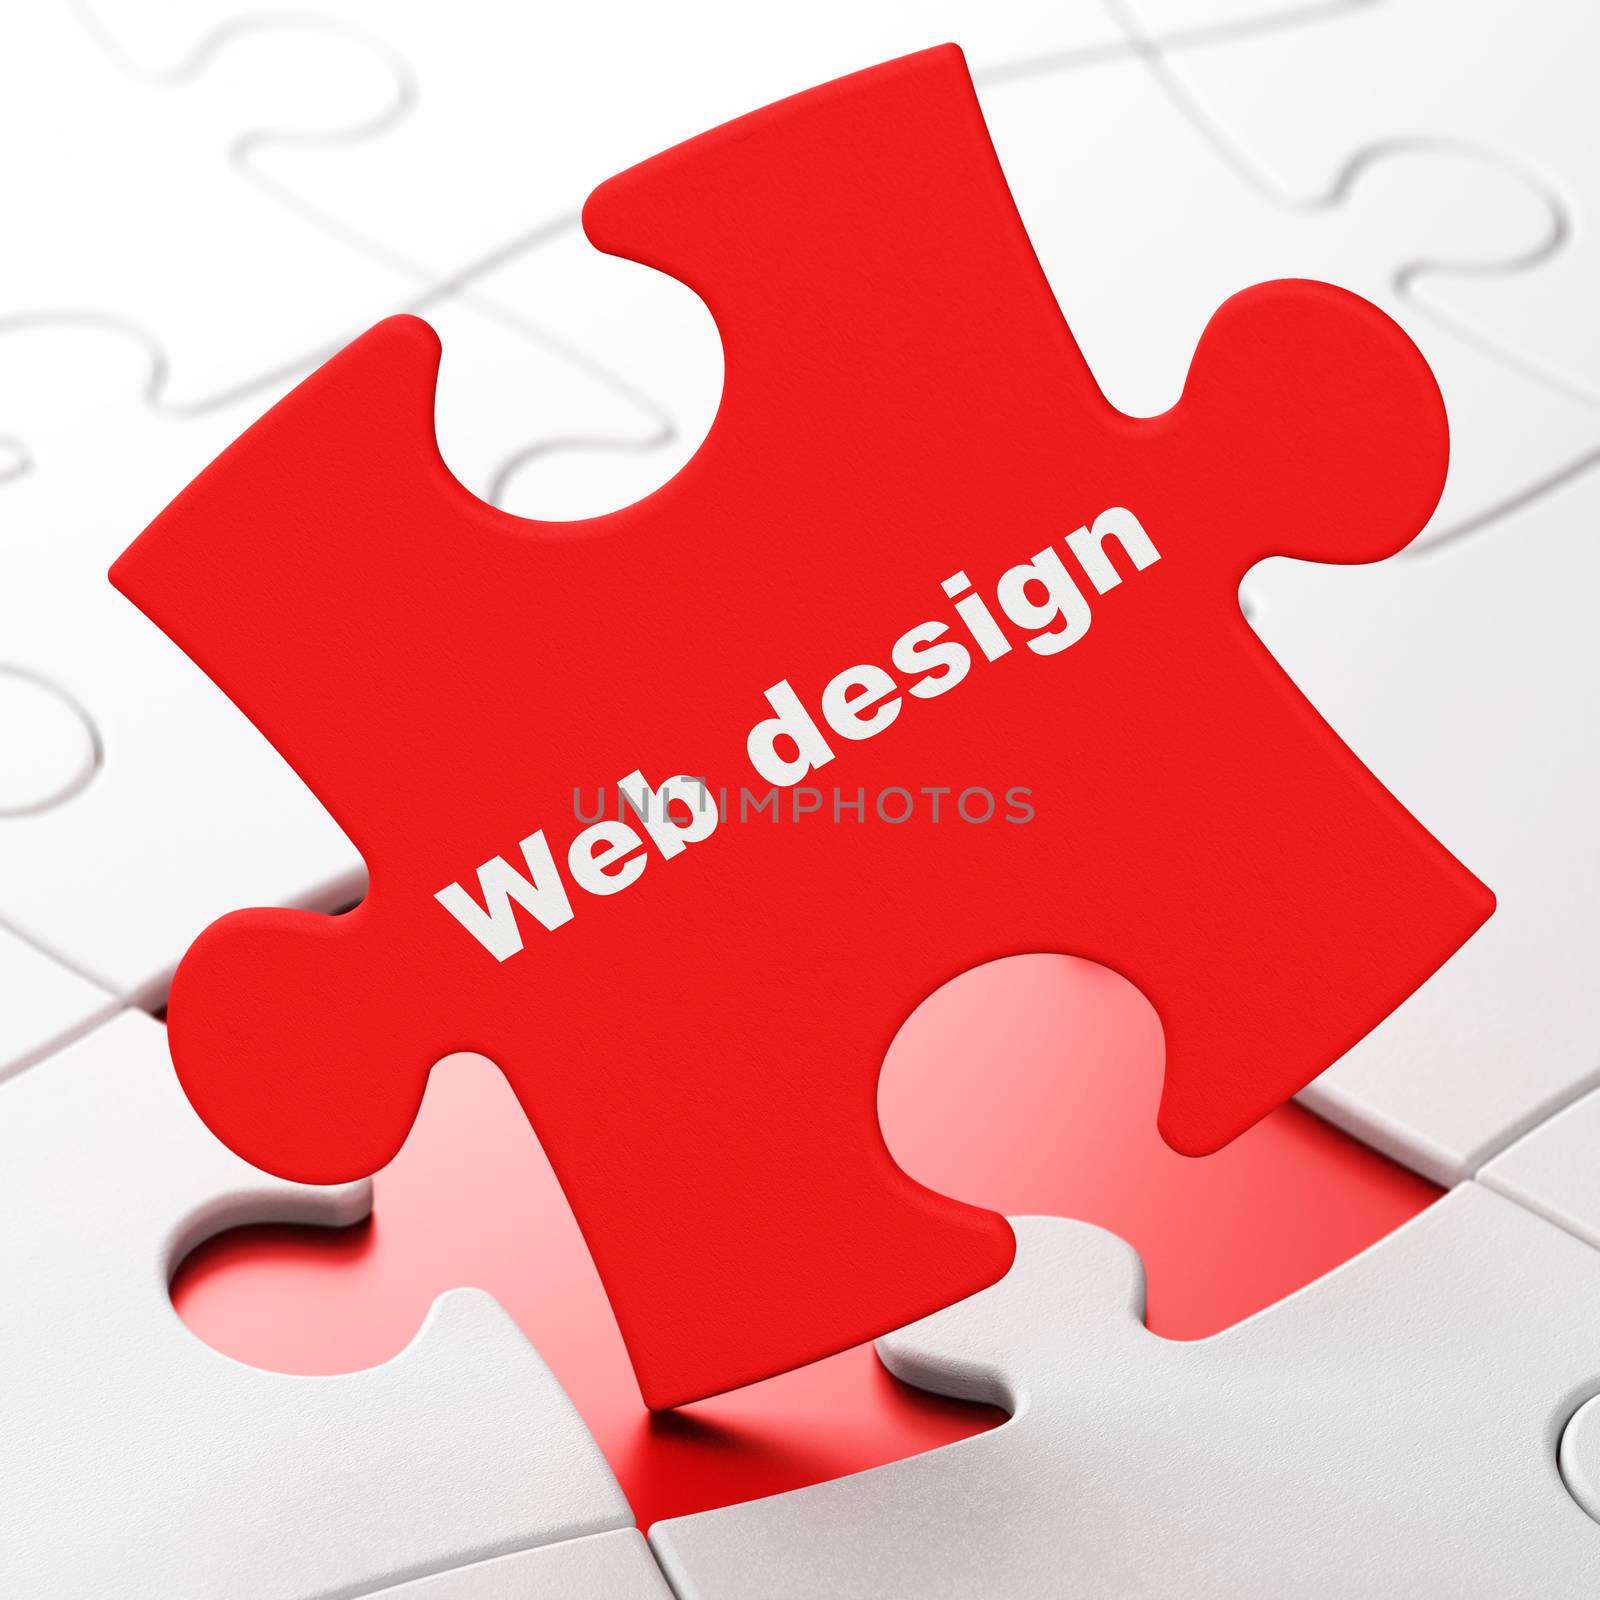 Web development concept: Web Design on puzzle background by maxkabakov